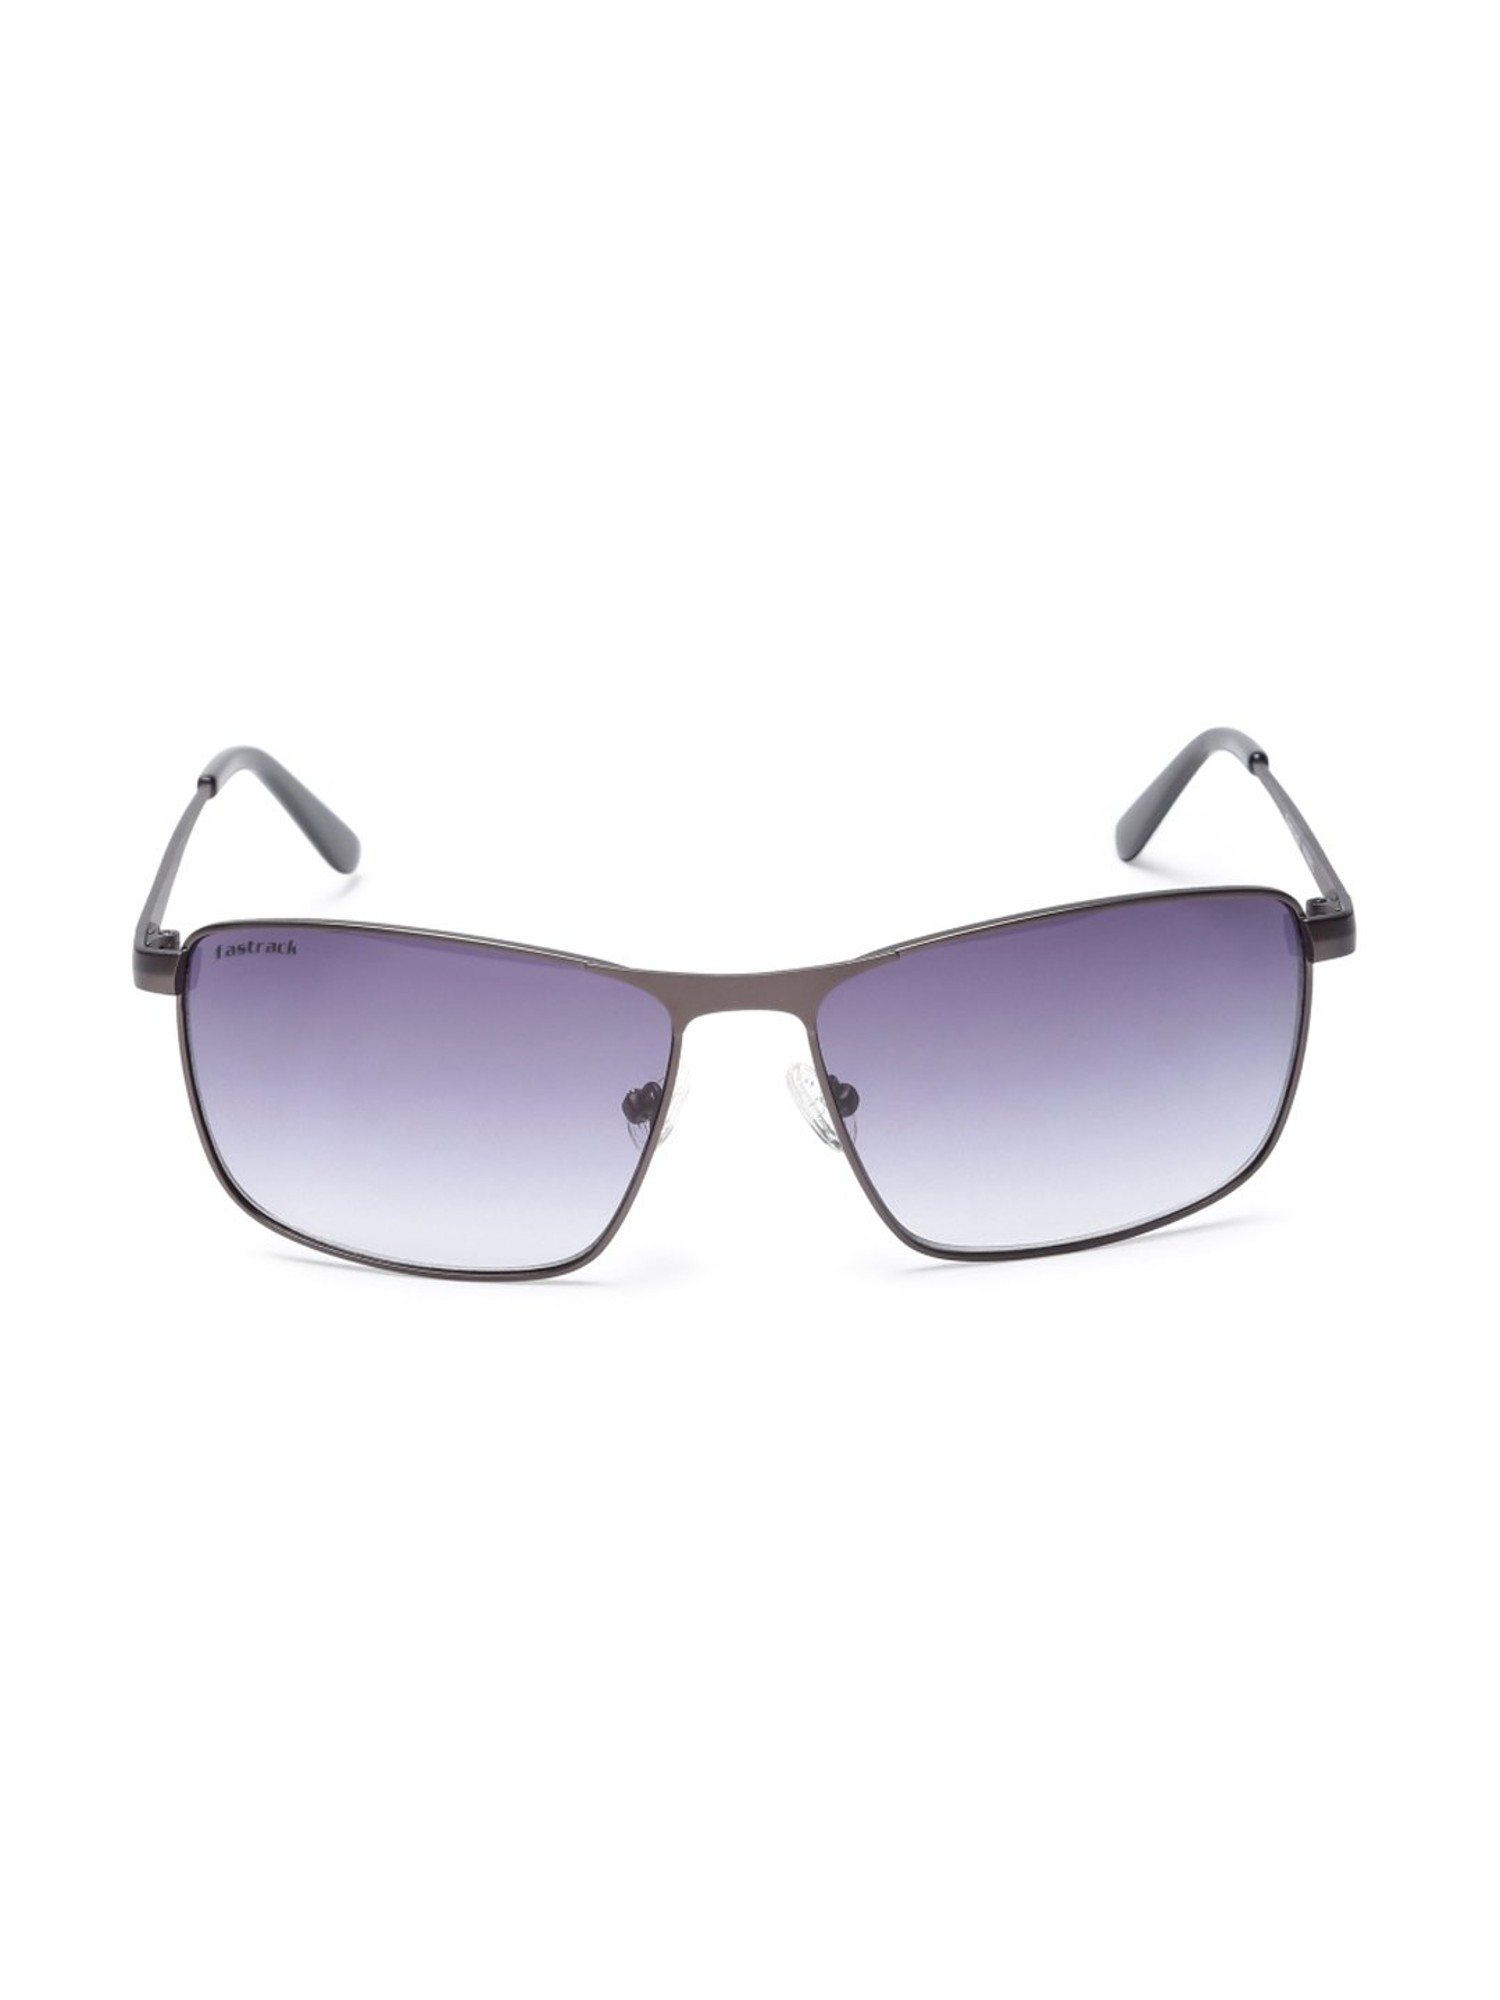 Fastrack sunglasses under 500🕶️ | best budget sunglasses #fastrack # sunglasses #budgetsunglasses - YouTube